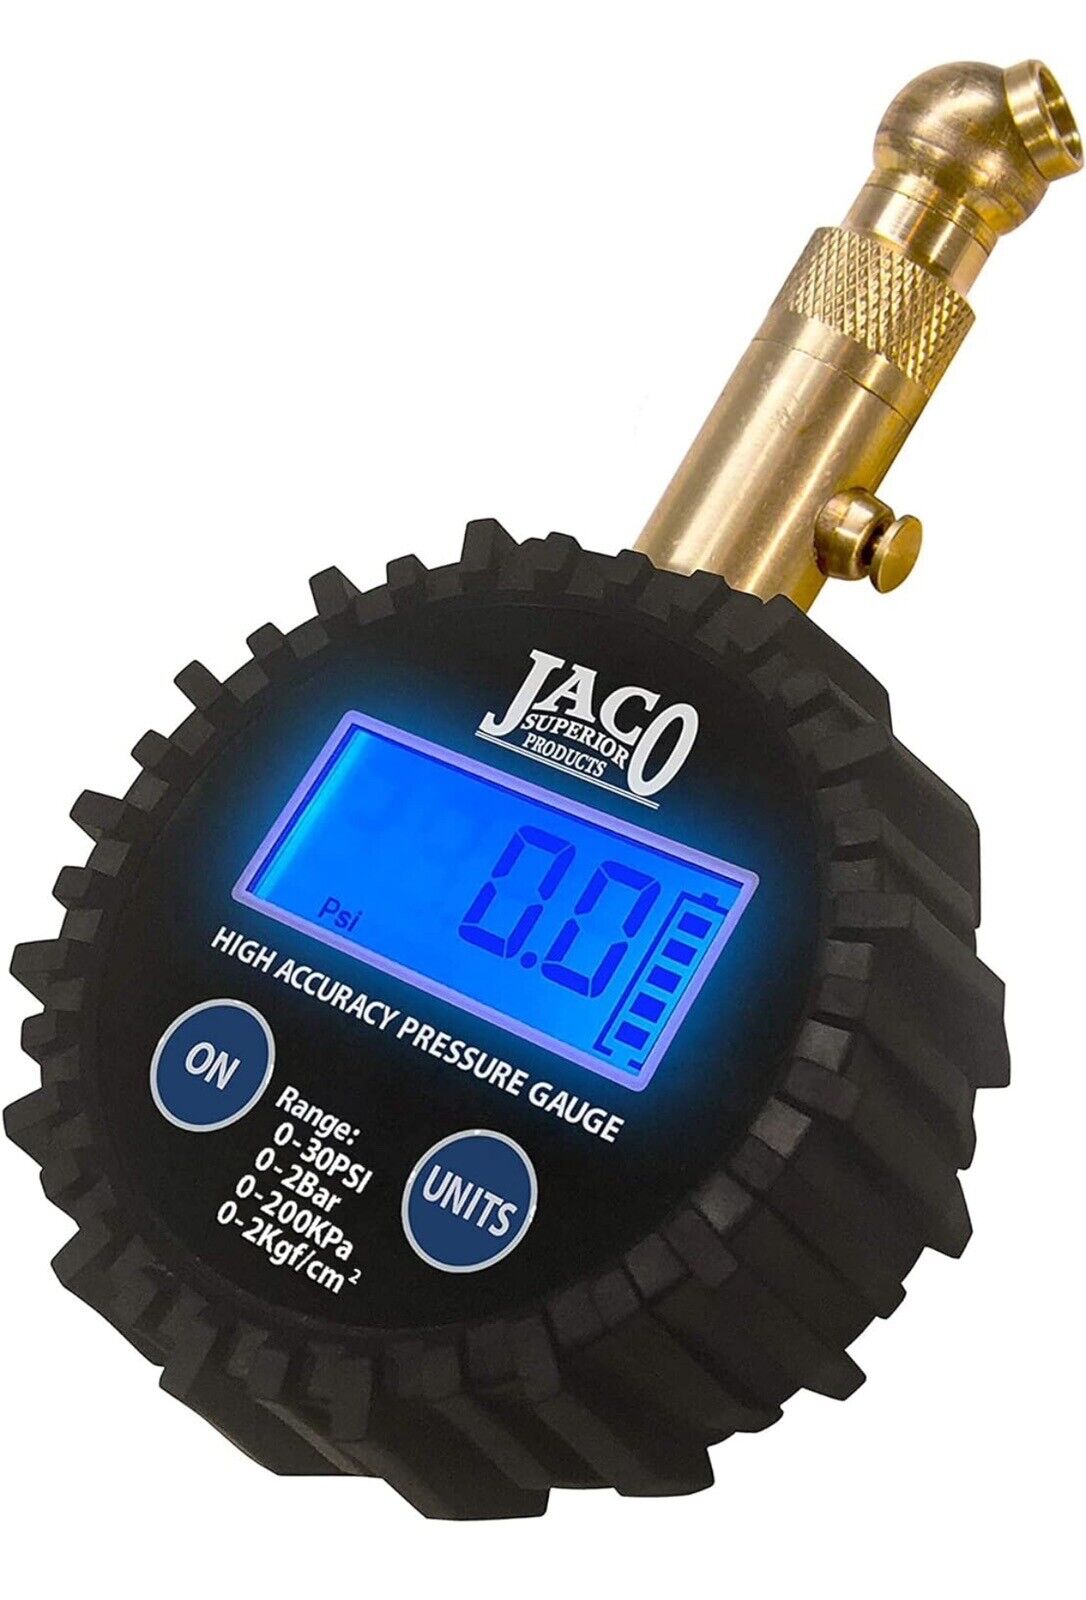 Jaco Elite Digital Professional Low Pressure Tire Gauge - 30 PSI